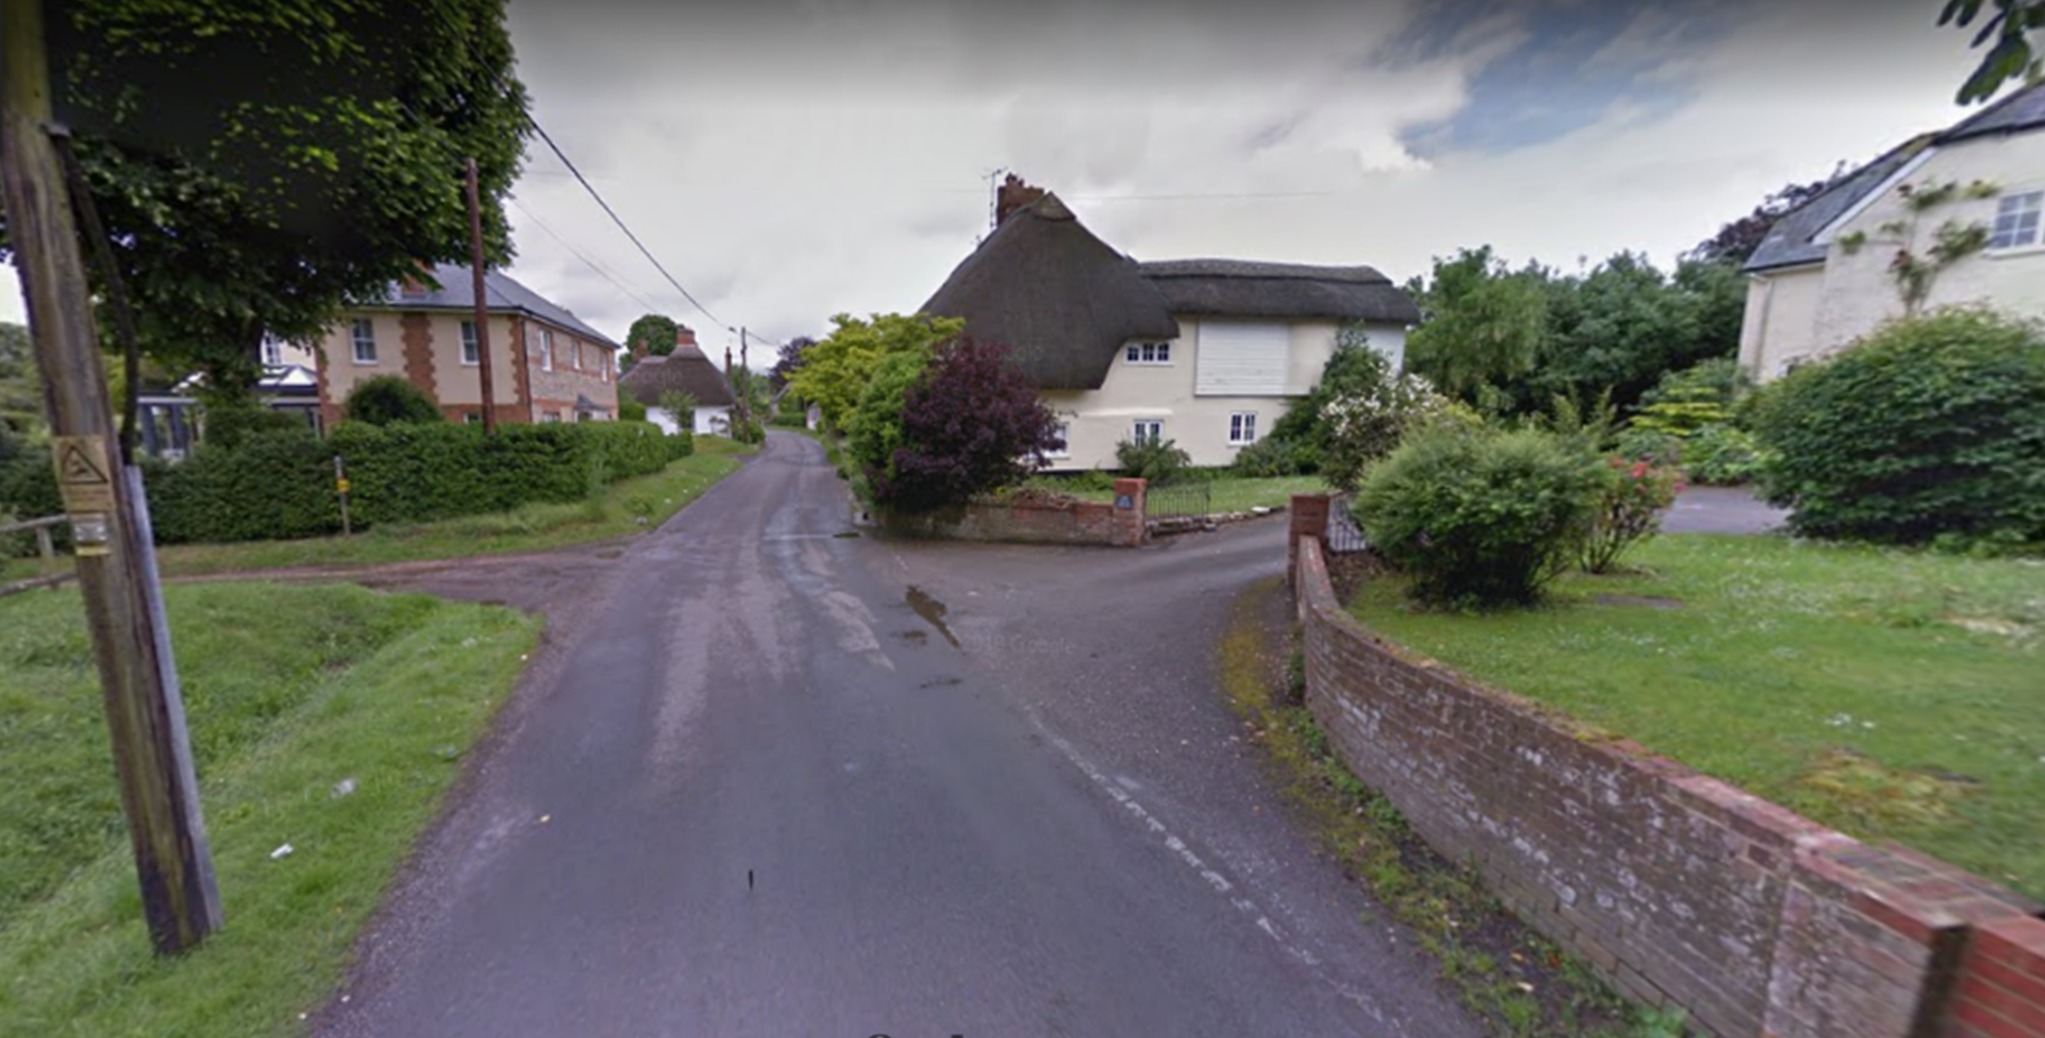 Great Durnford, Salisbury. Google Maps